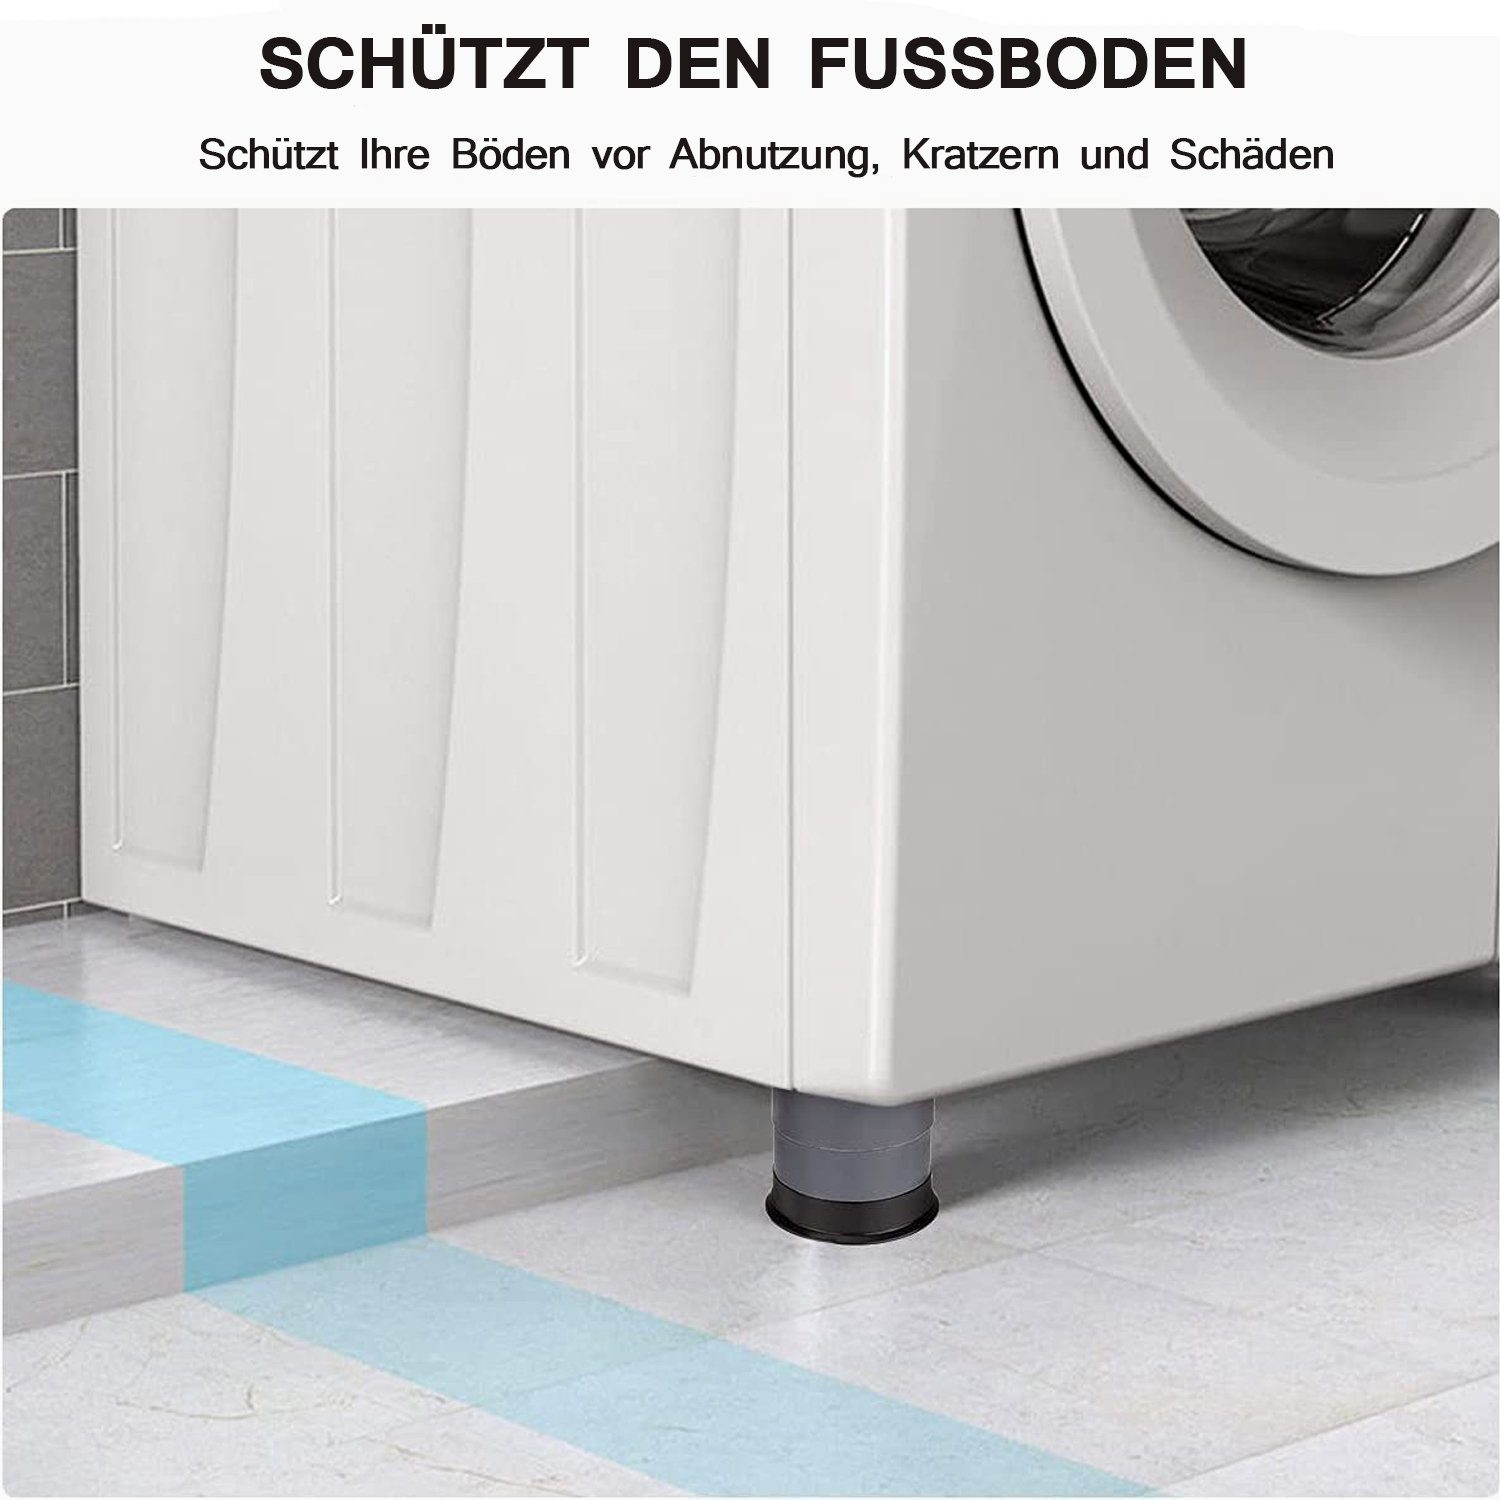 NUODWELL Möbelfuß Waschmaschine Pad Universal Vibration Füße 4 Fußpolster Stück Anti